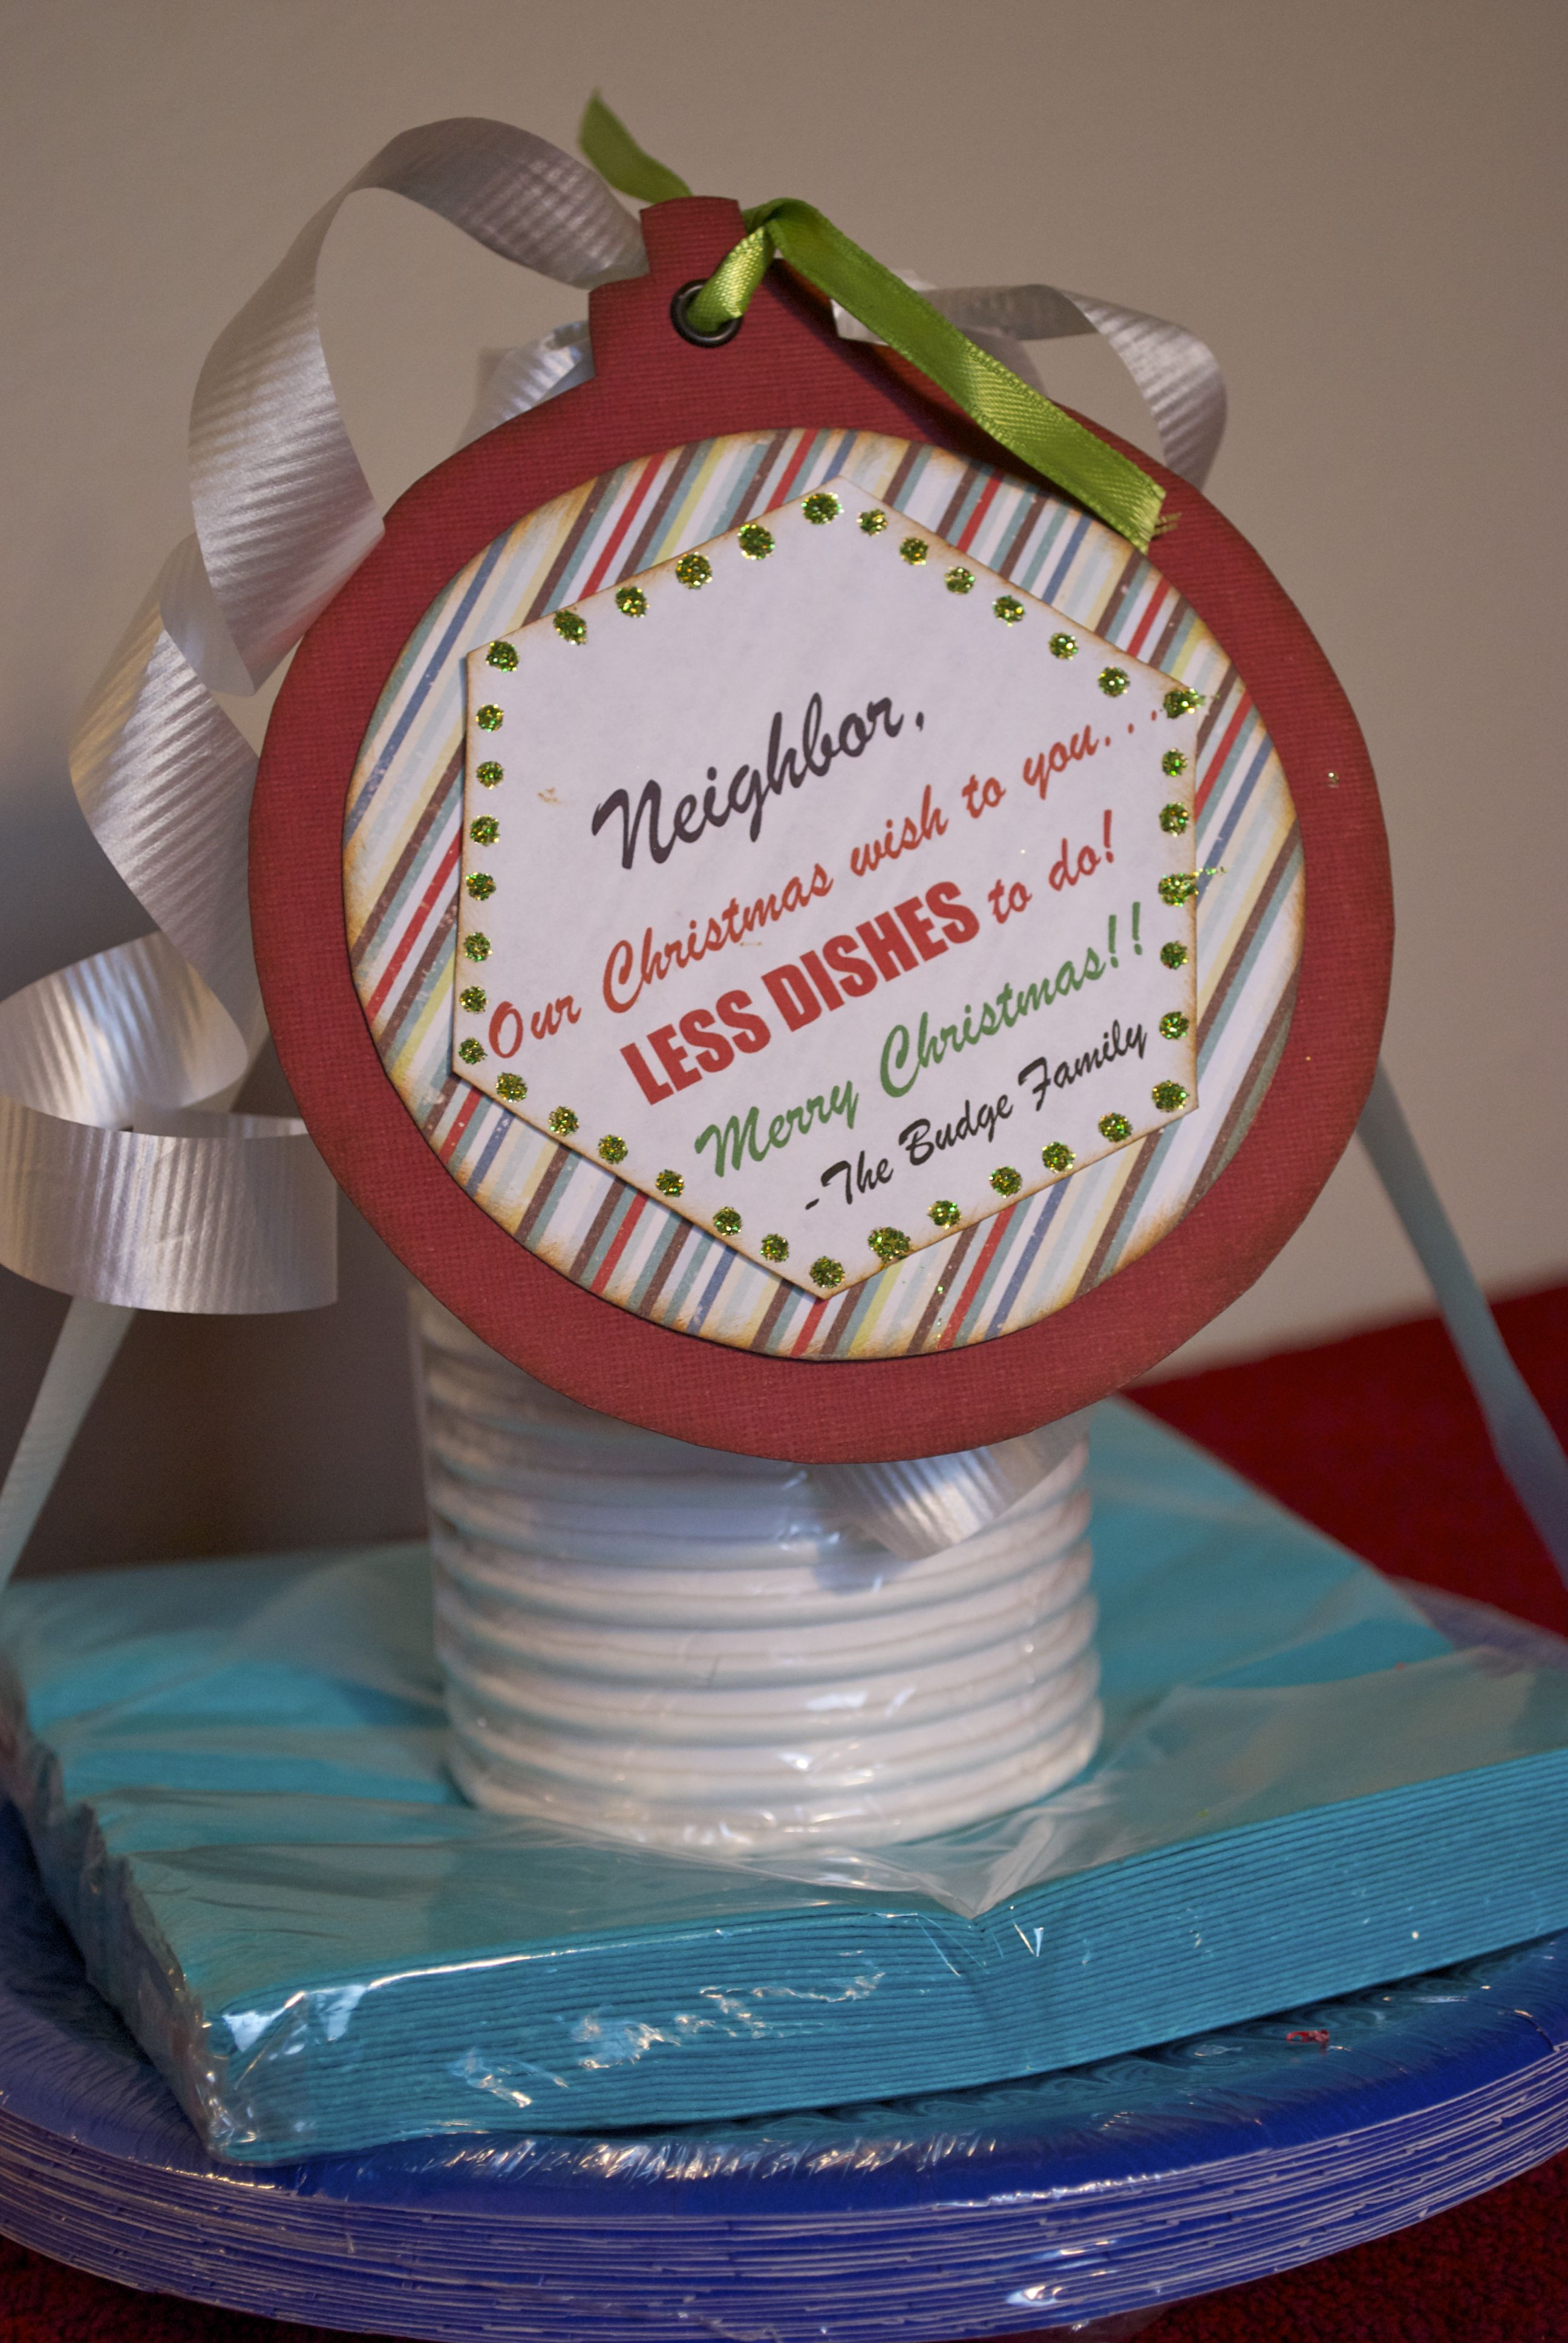 Best ideas about Neighbor Christmas Gift Ideas
. Save or Pin 25 Neighbor Gift Ideas for Christmas Now.